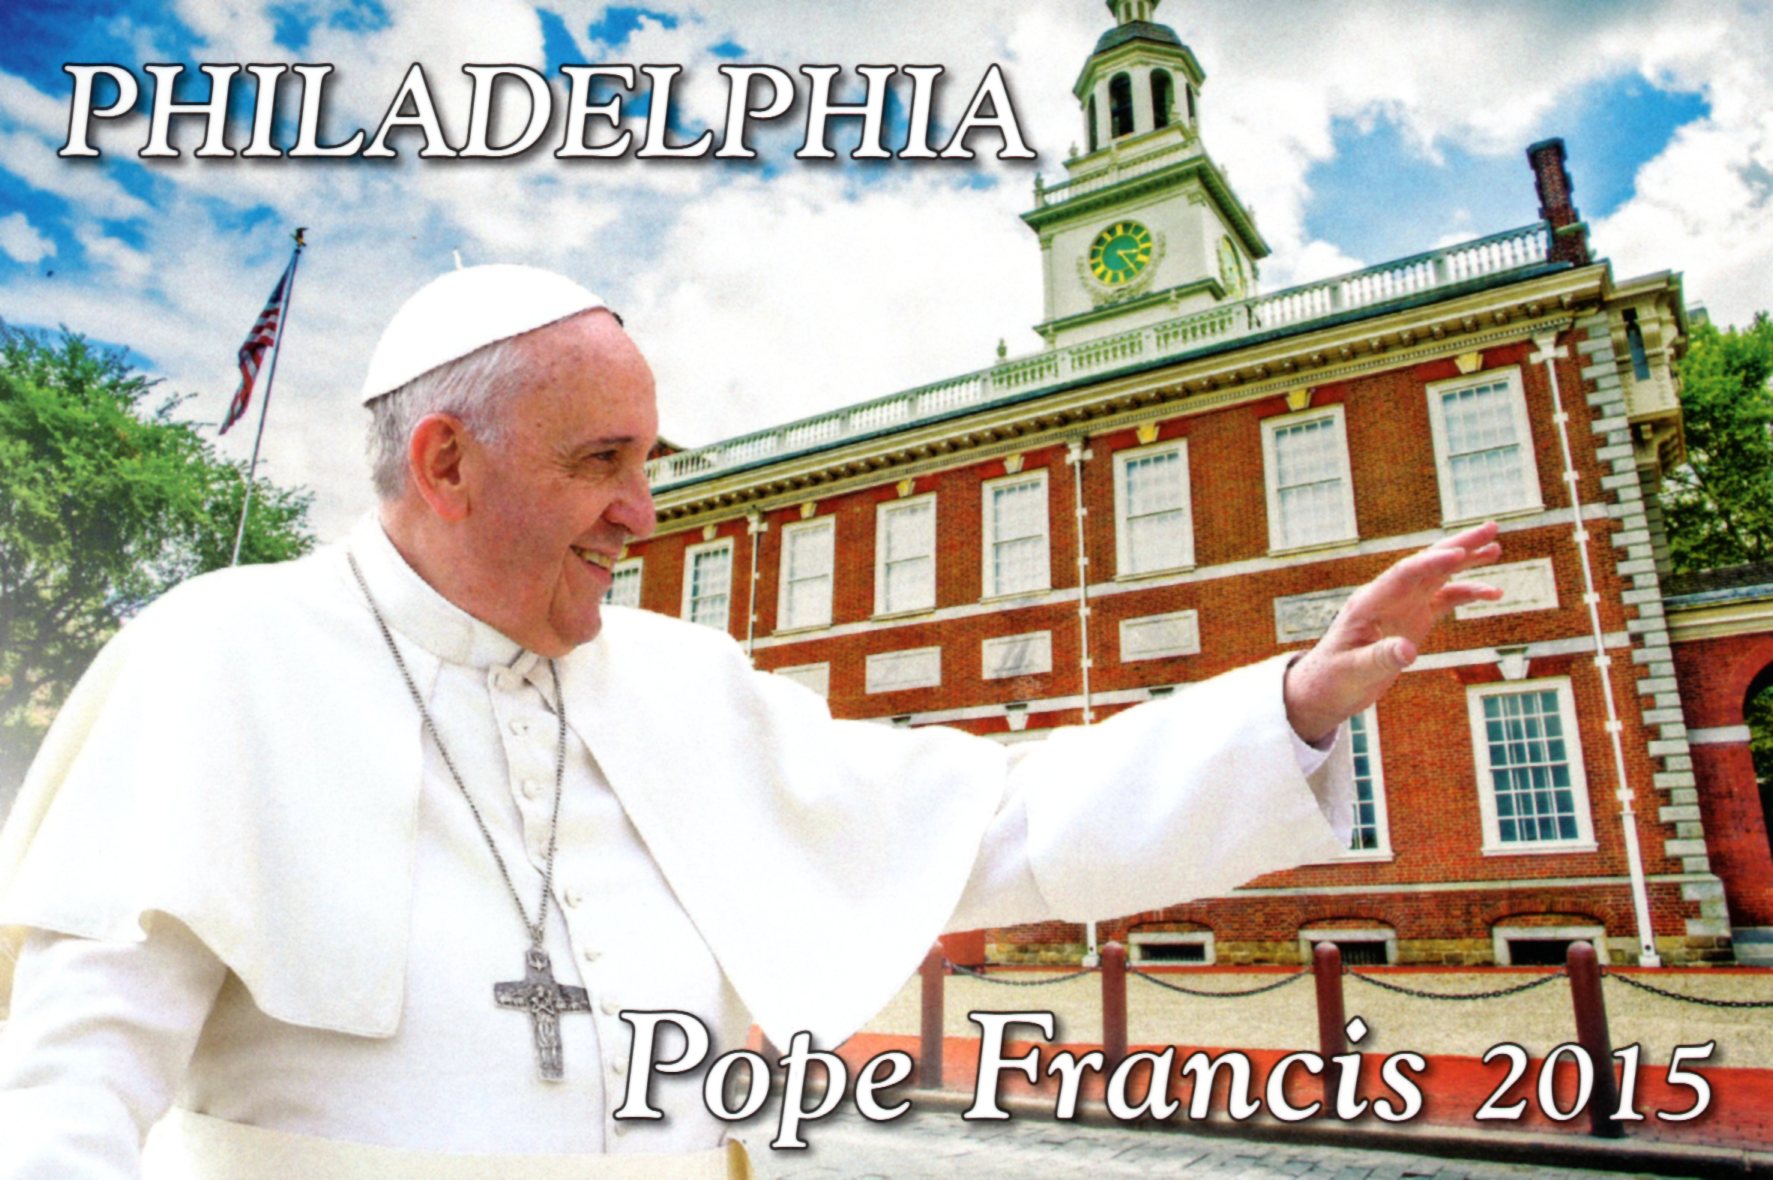 papal visit philadelphia